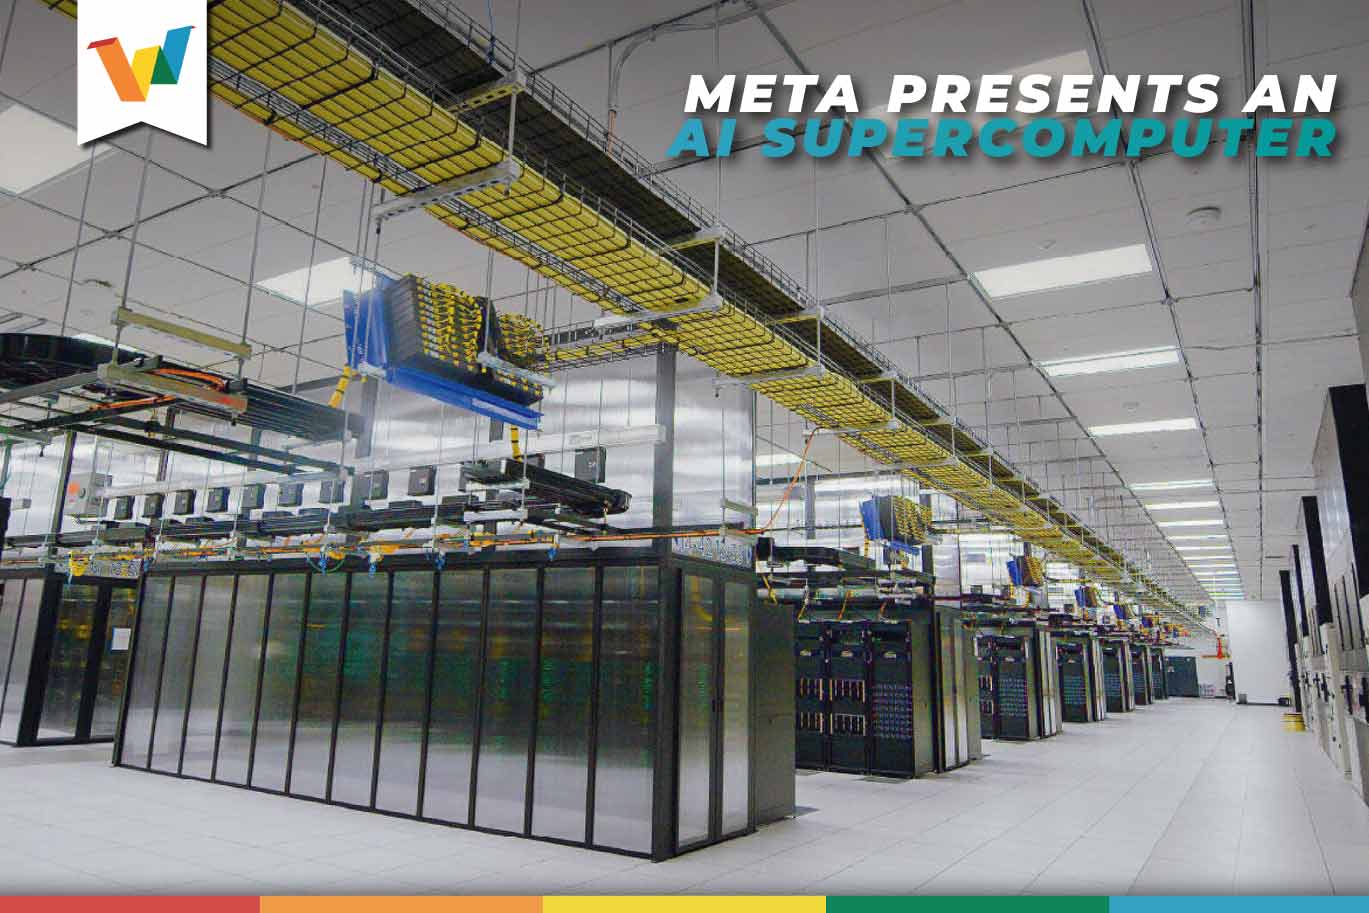 Meta presents an AI supercomputer